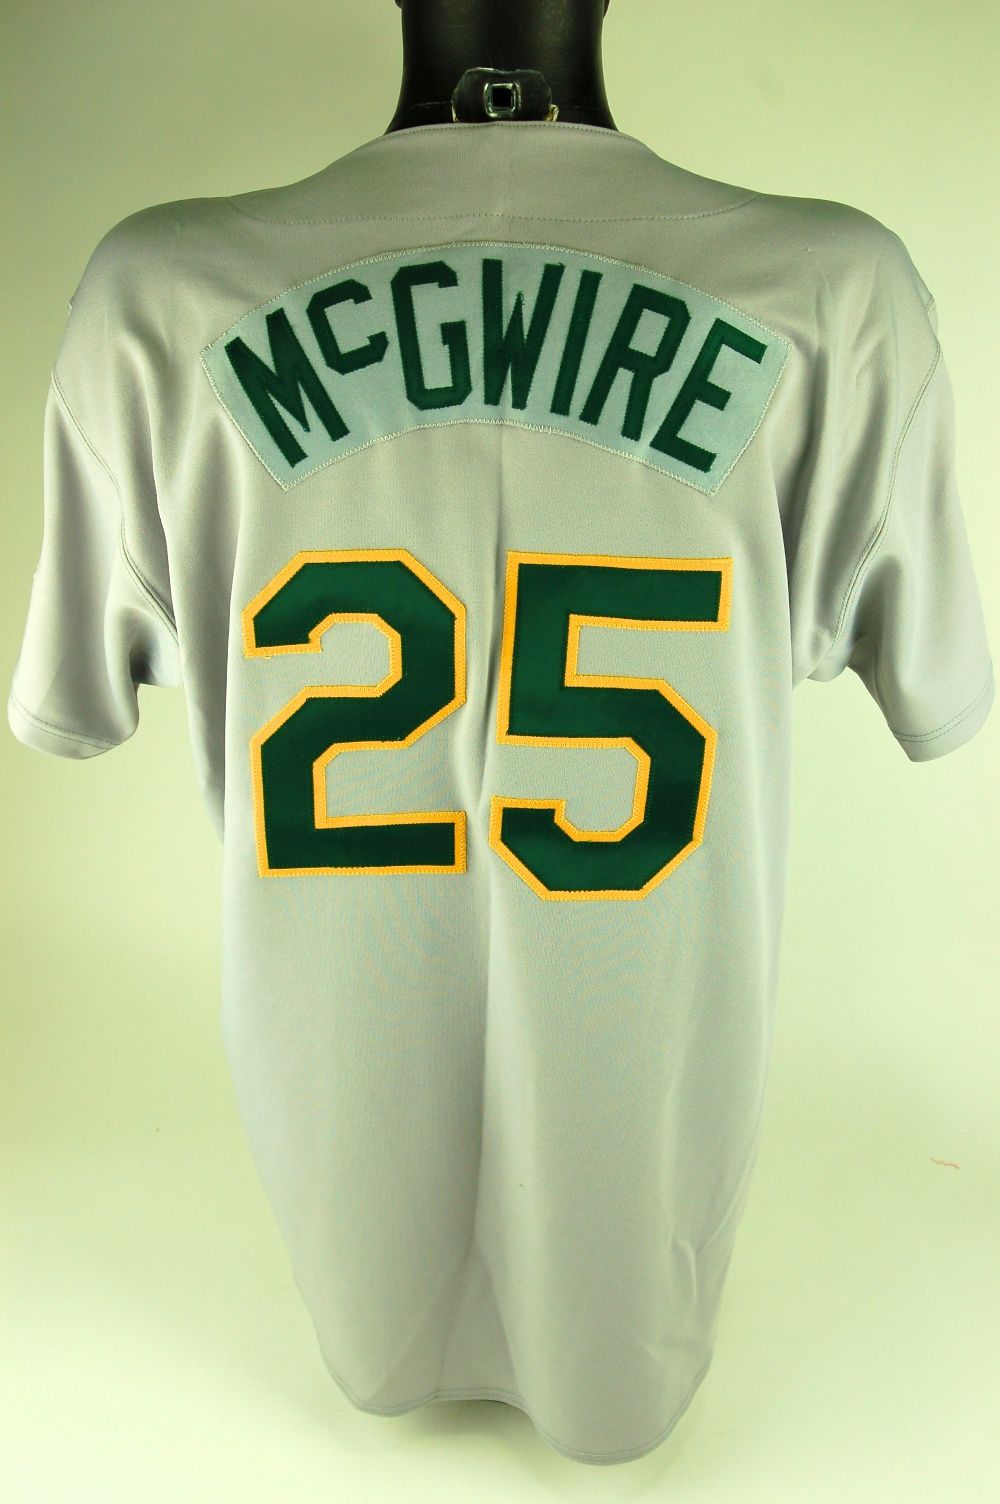 Official Mark McGwire Oakland Athletics Jerseys, A's Mark McGwire Baseball  Jerseys, Uniforms